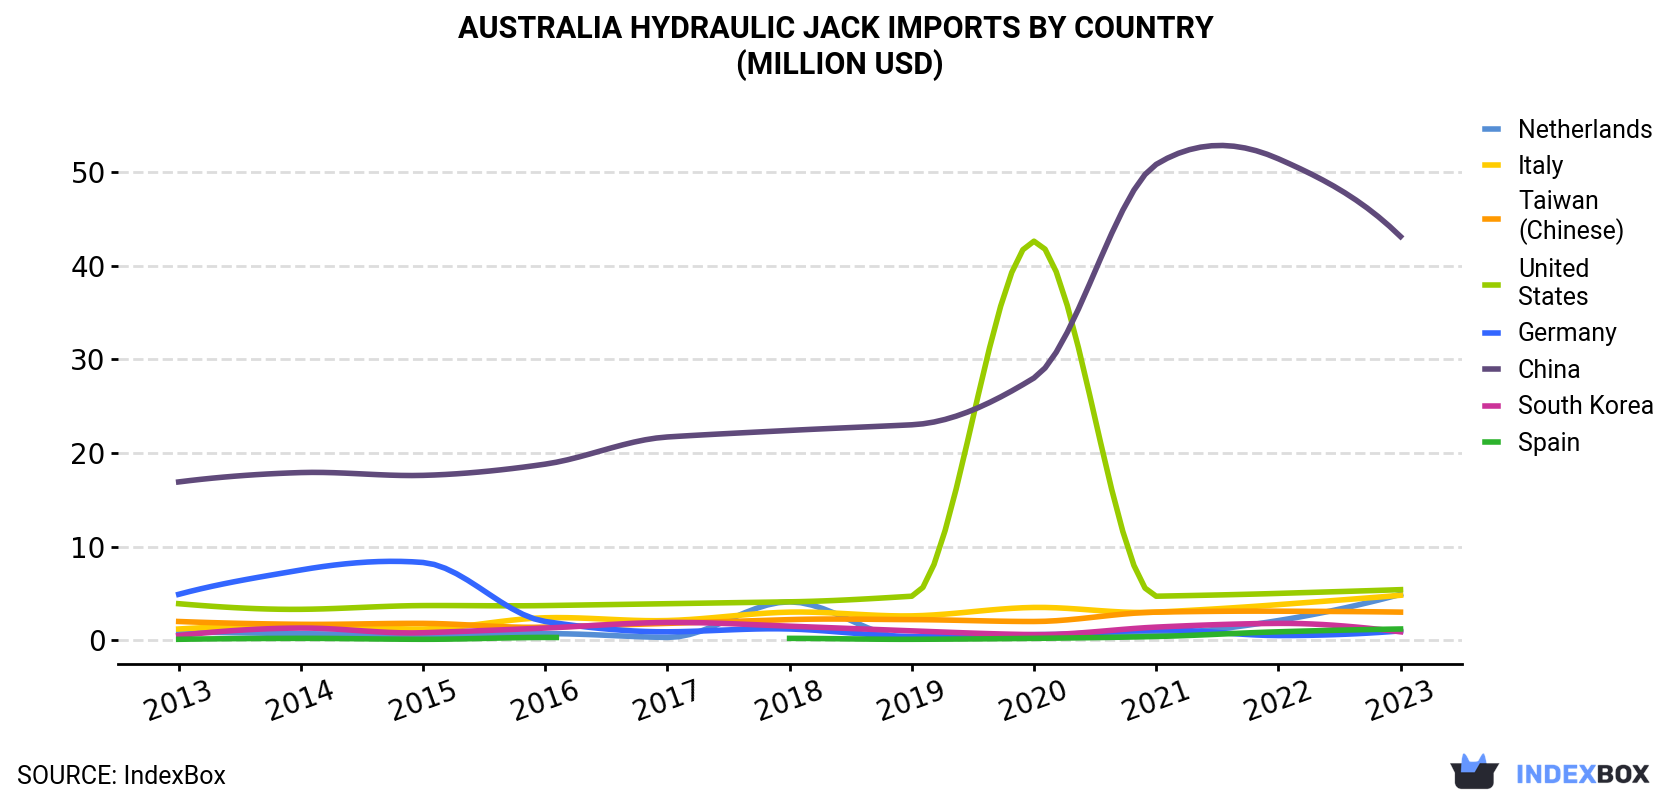 Australia Hydraulic Jack Imports By Country (Million USD)